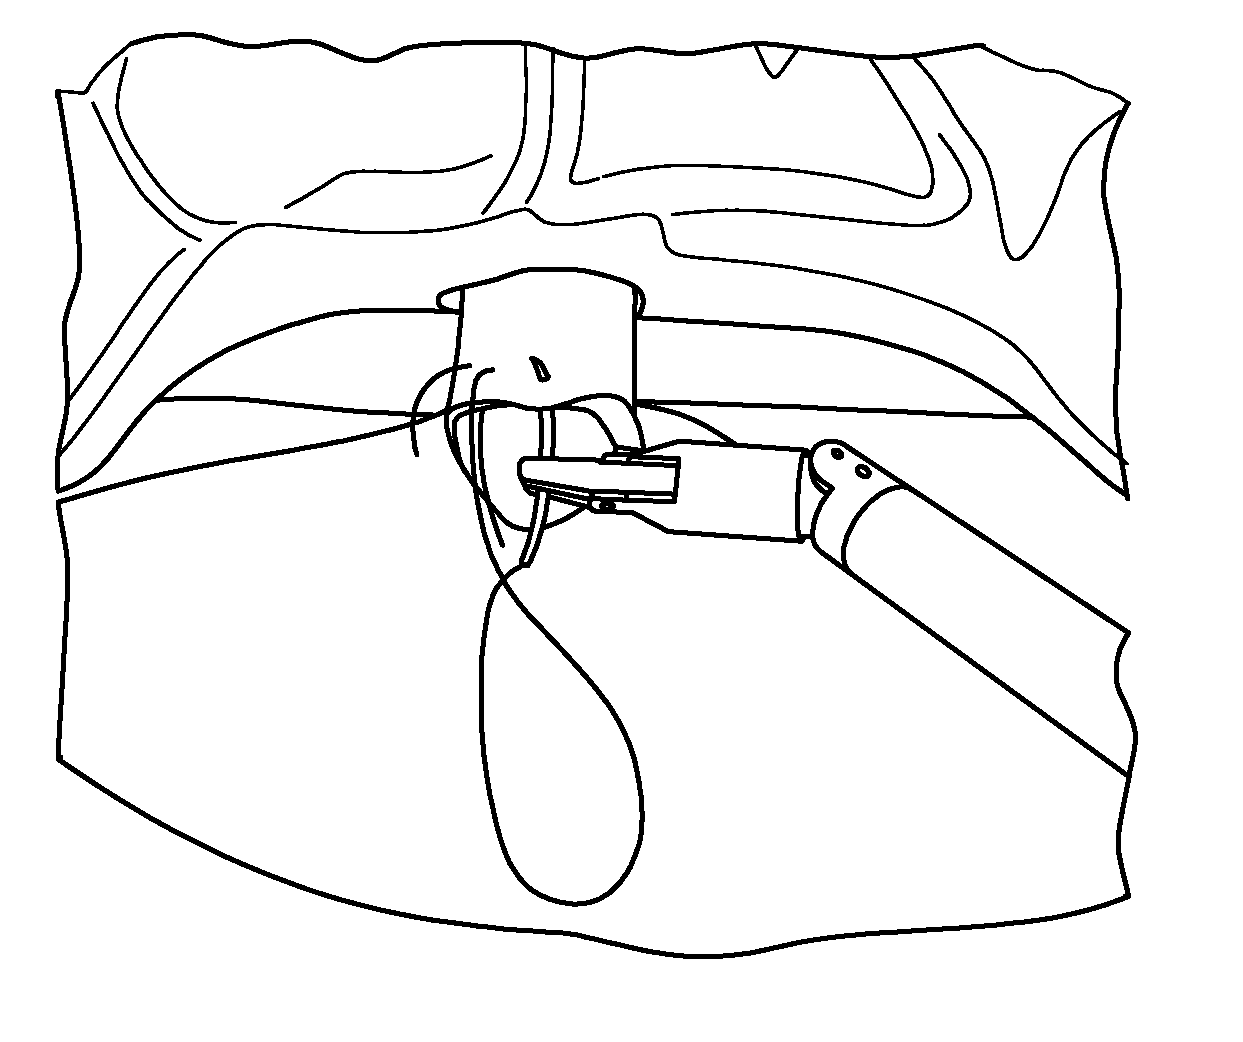 Urethrovesical Anastomosis Suturing Method Using Articulating Laparoscopic Device